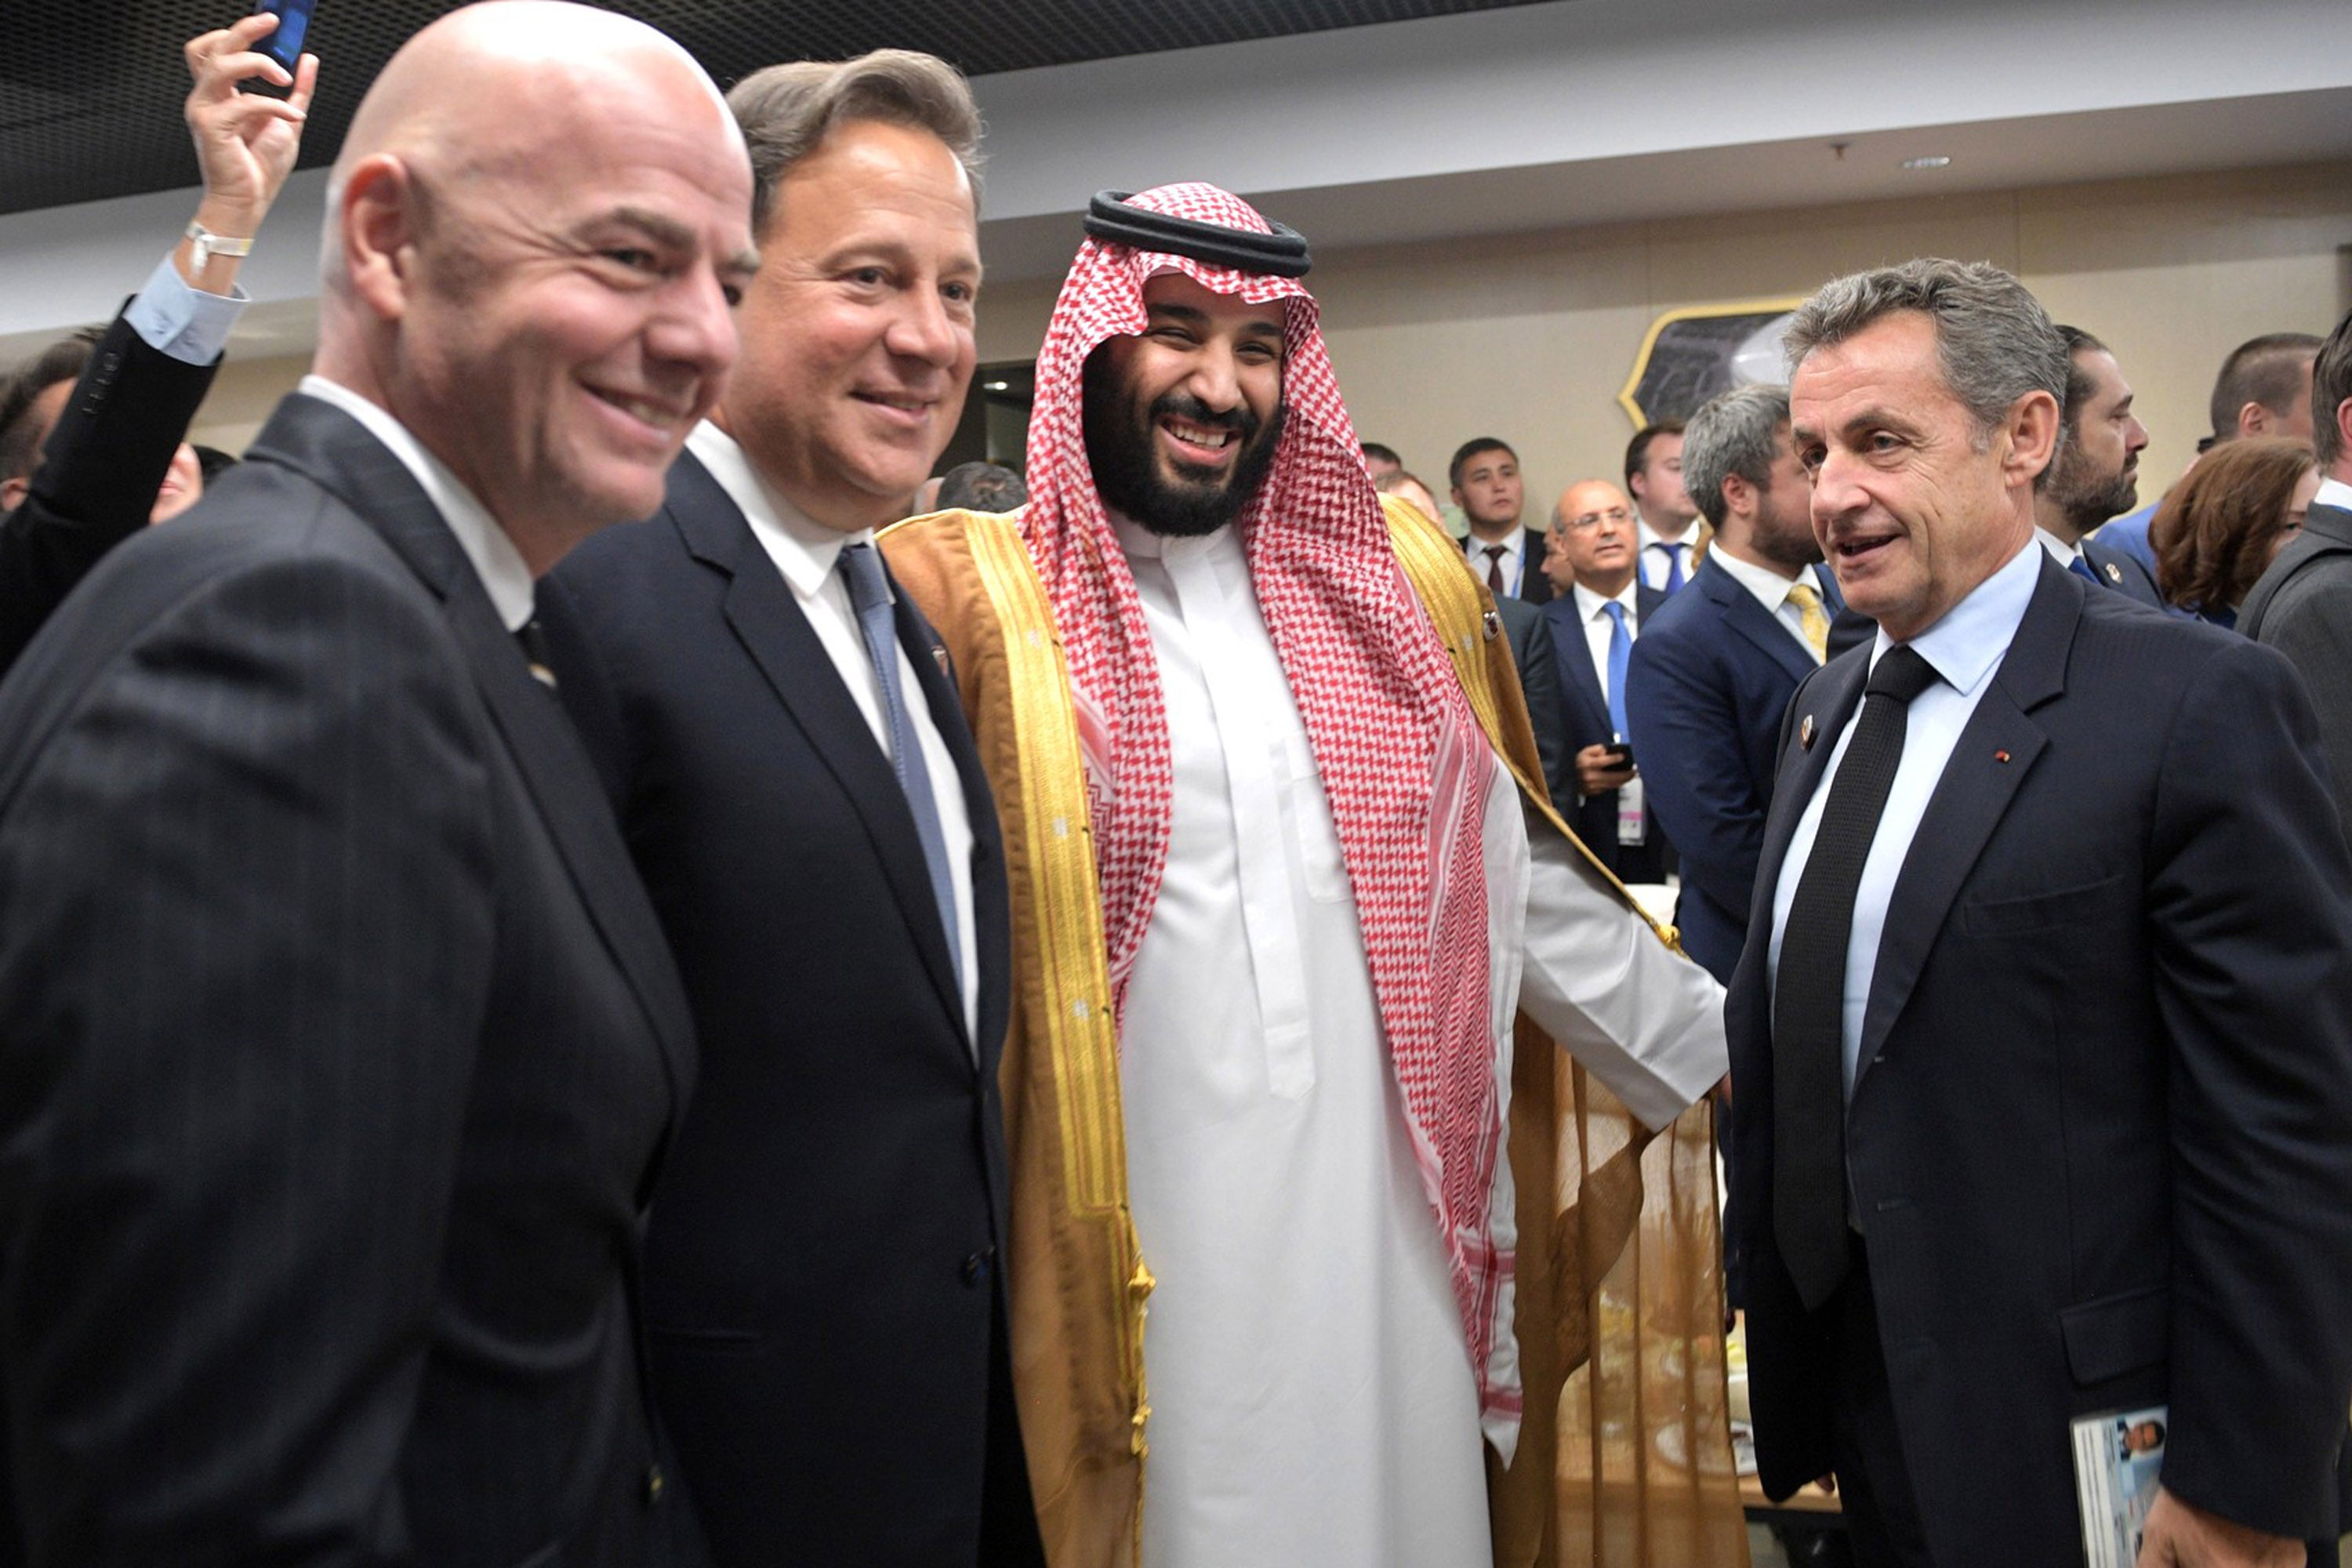 Fifa President Gianni Infantino alongside Saudi Arabia’s Crown Prince Mohammed Bin Salman Al Saud at the 2018 World Cup